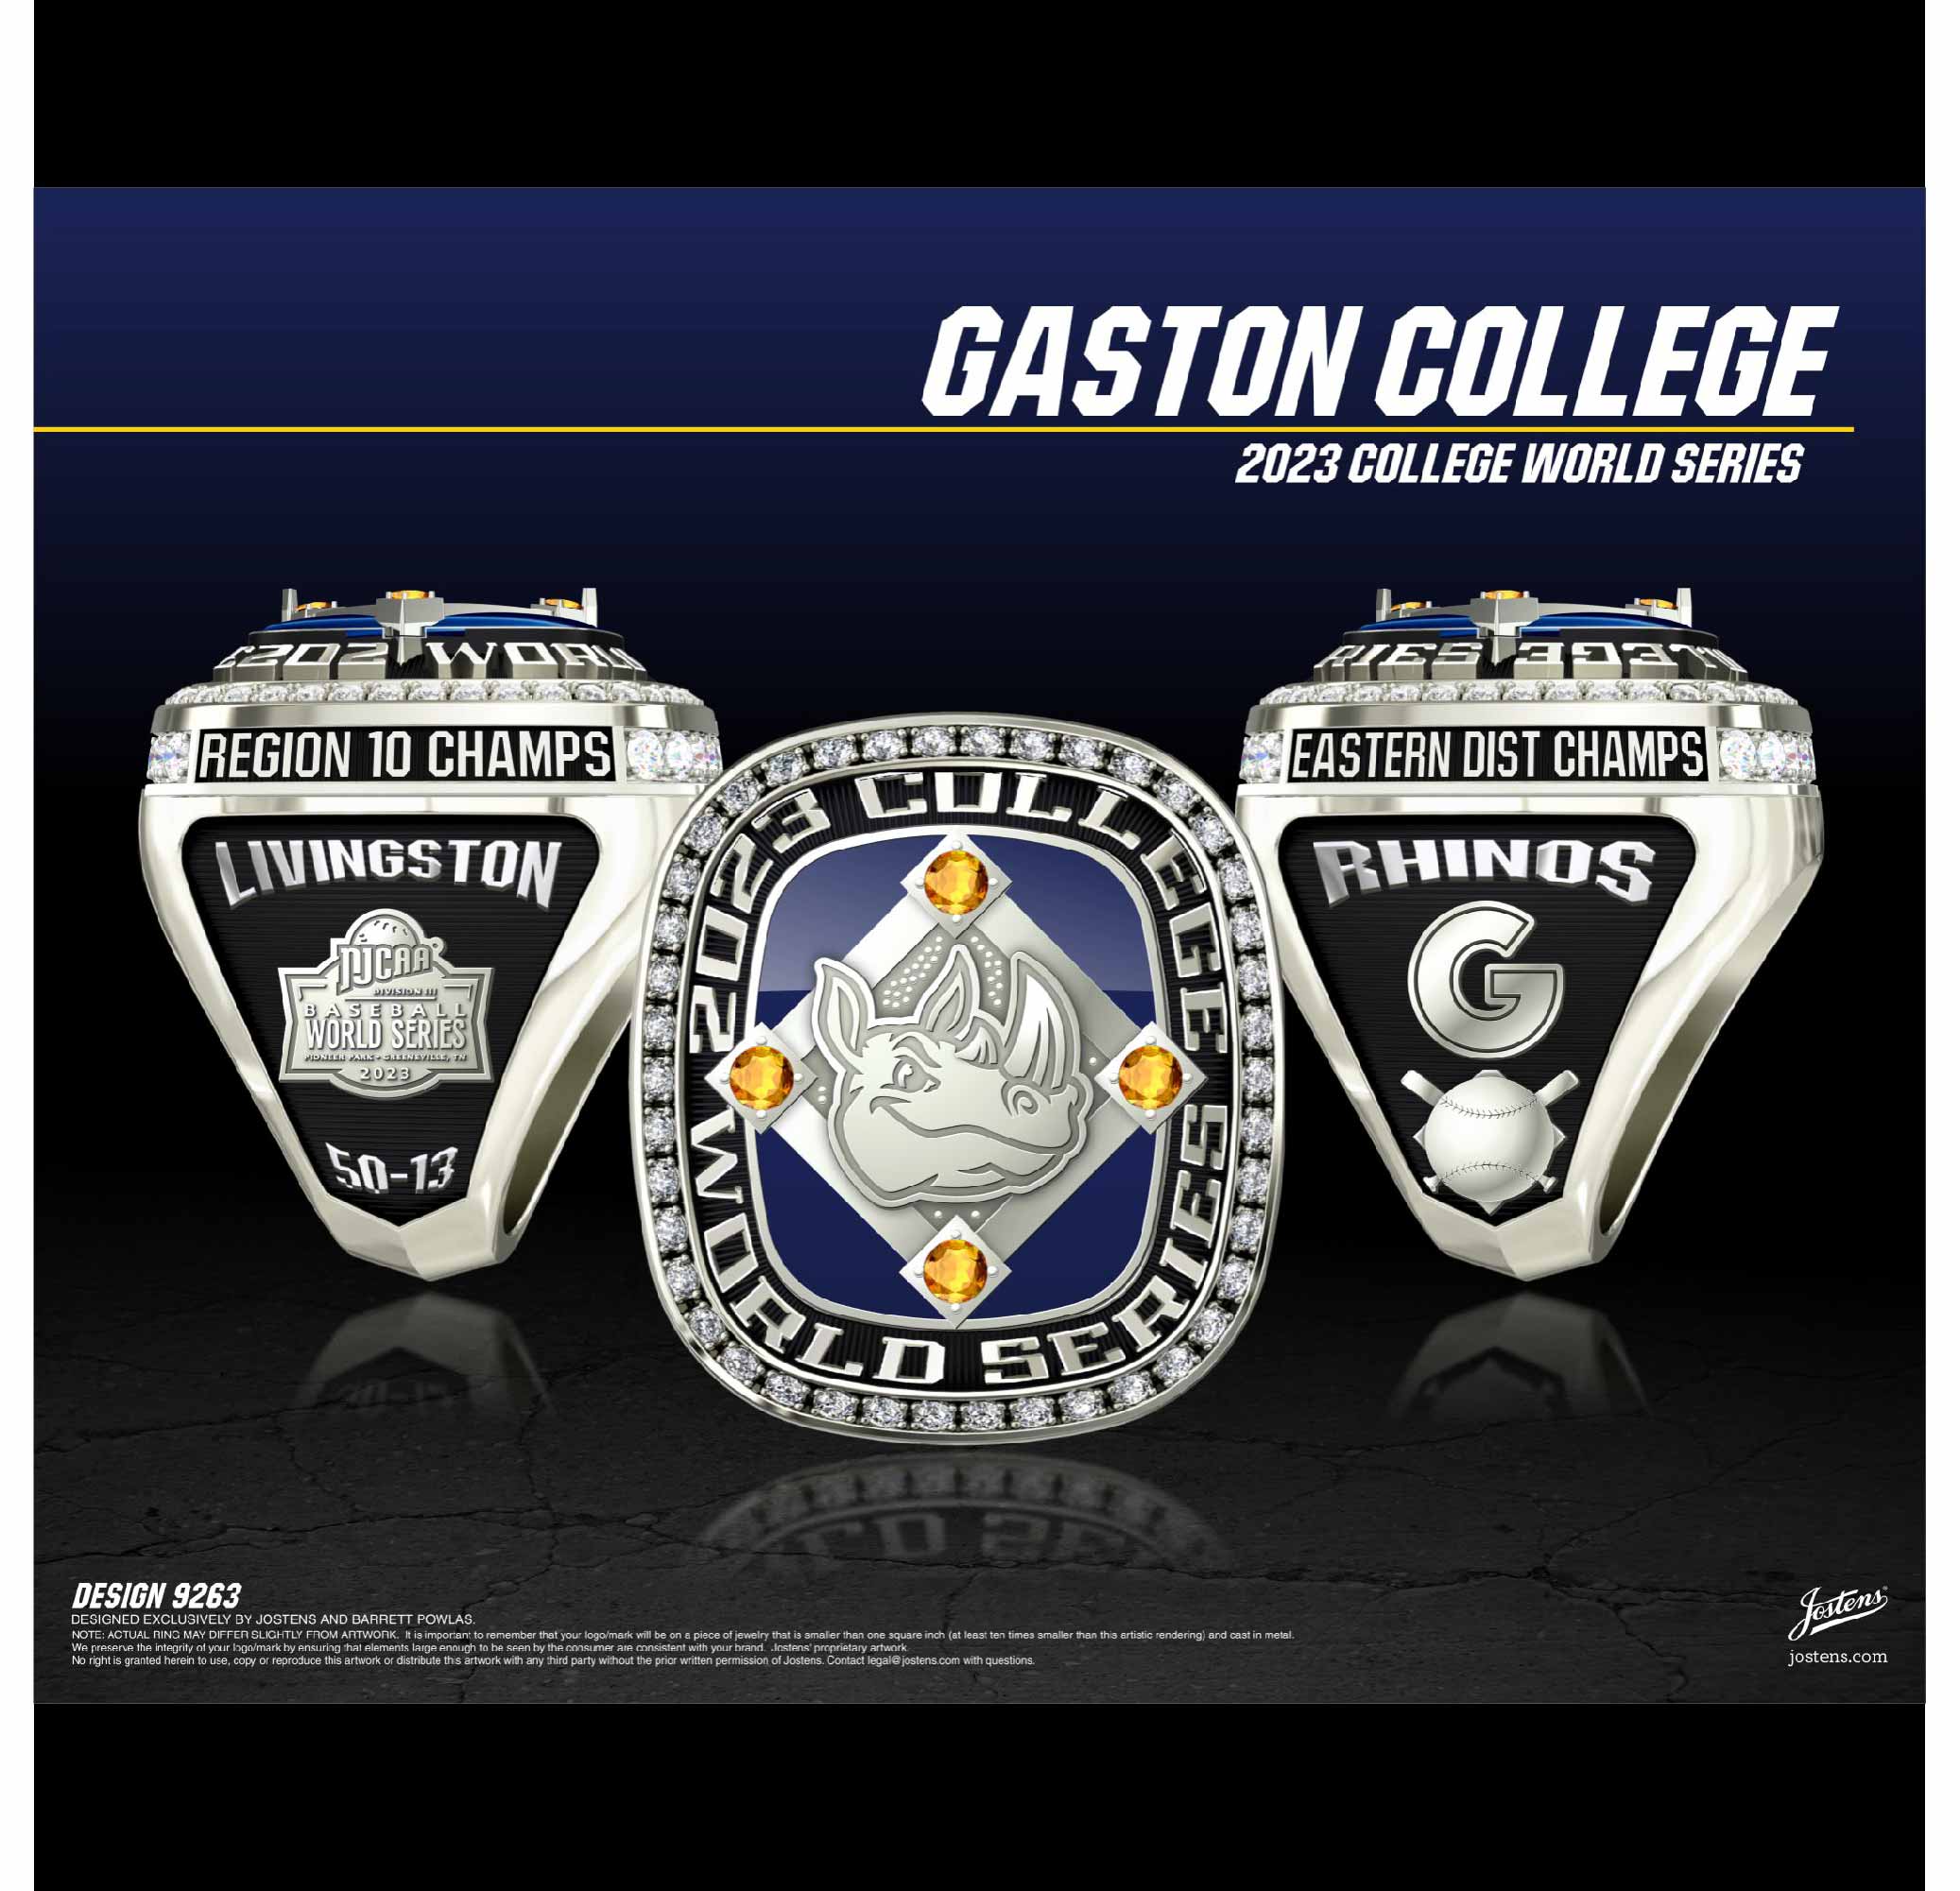 Gaston College Baseball 2023 College World Series Championship Ring